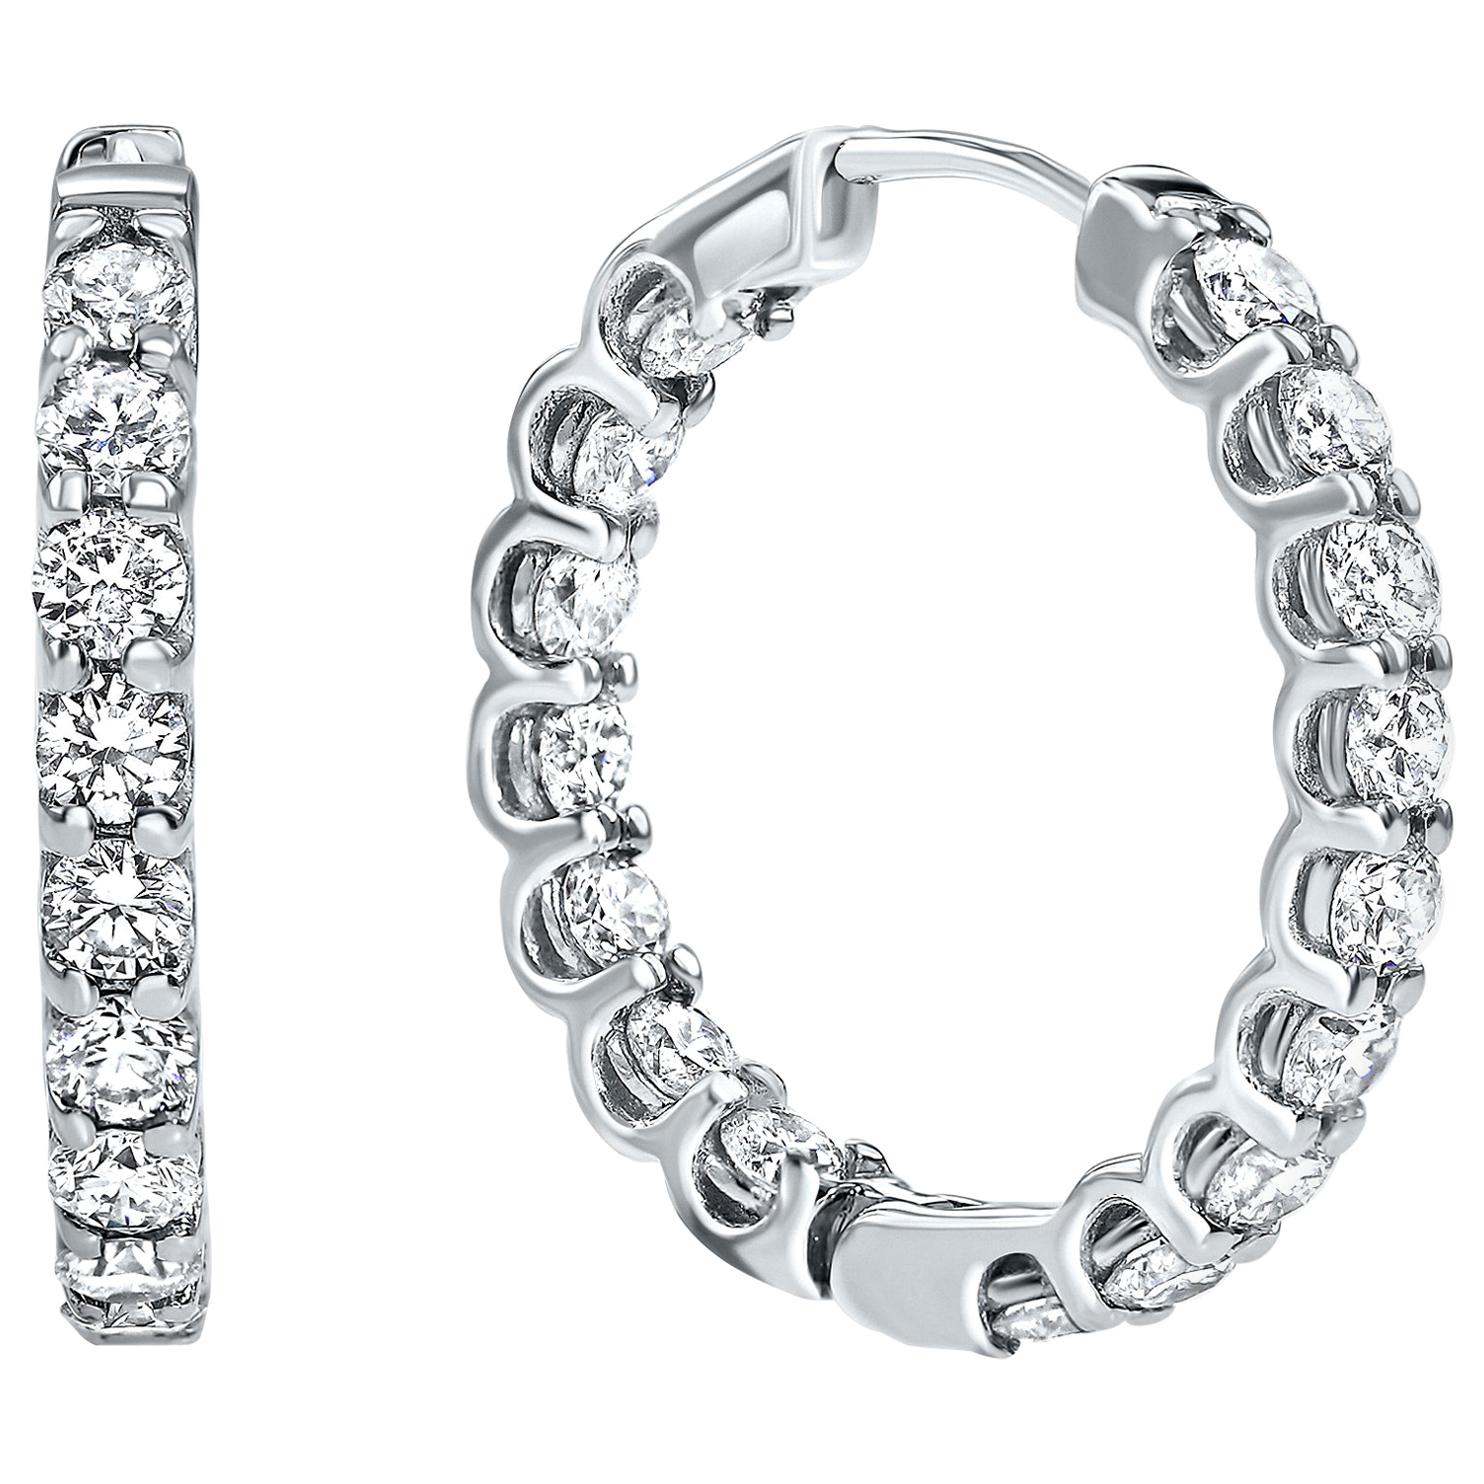 1.22 Carat Diamond Modern Hoop Earrings in 14 Karat White Gold - Shlomit Rogel For Sale